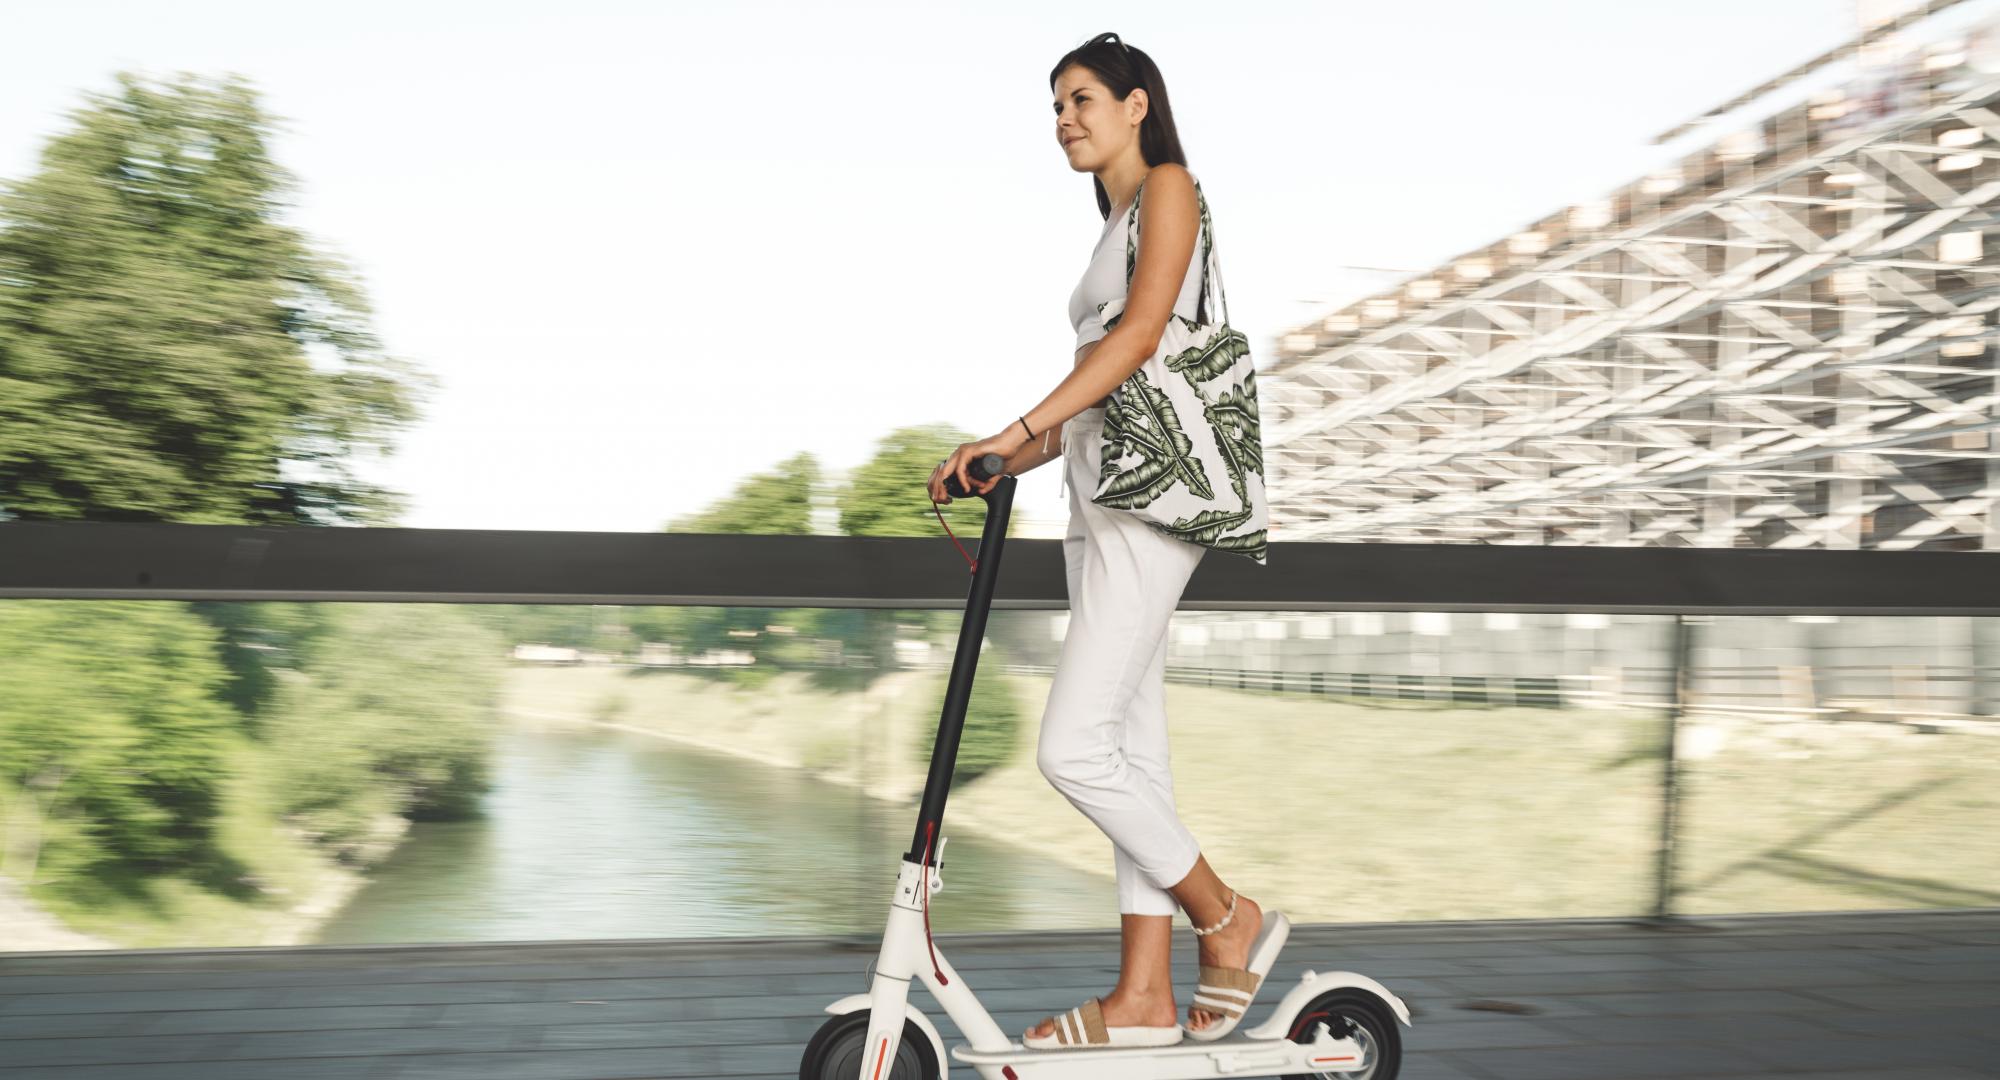 Woman rides an e-scooter